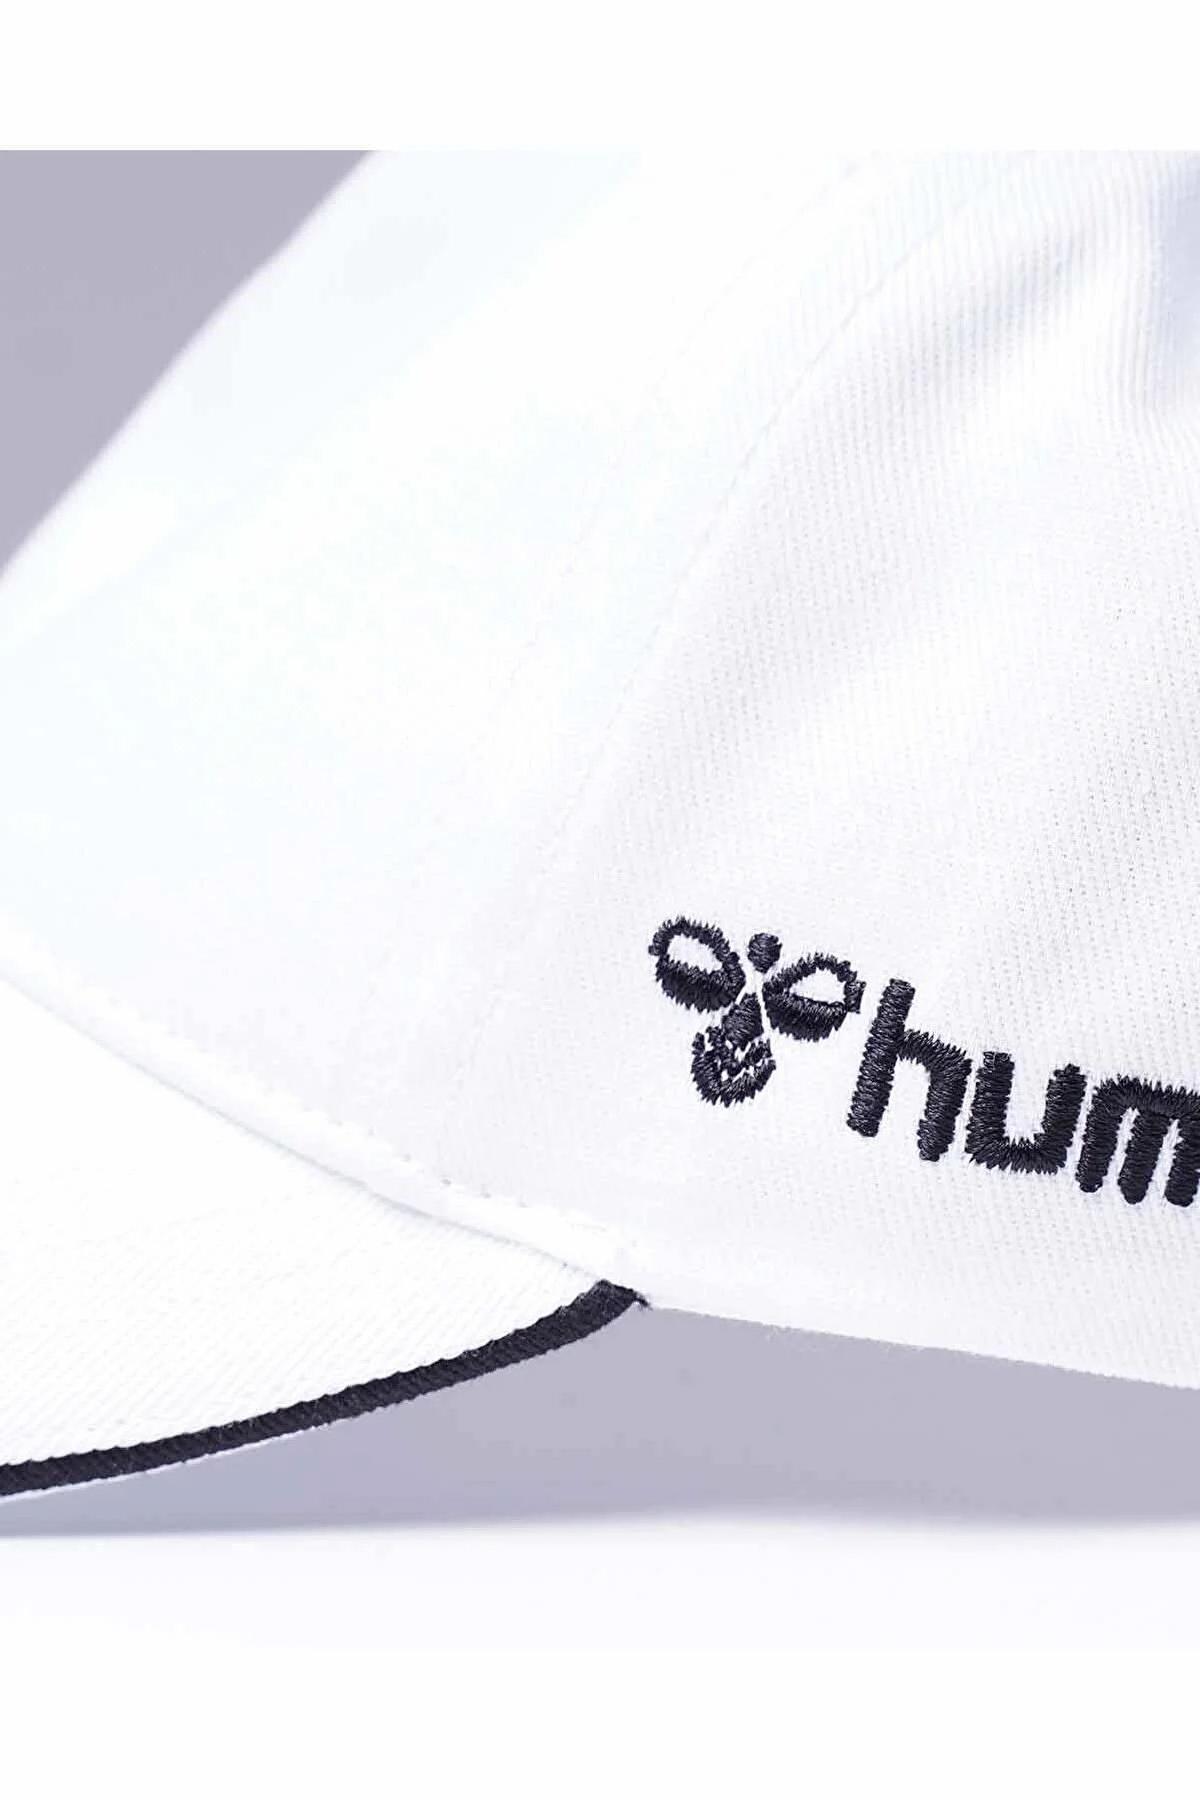 کلاه اسپرت یونیسکس Hummel کد.1189